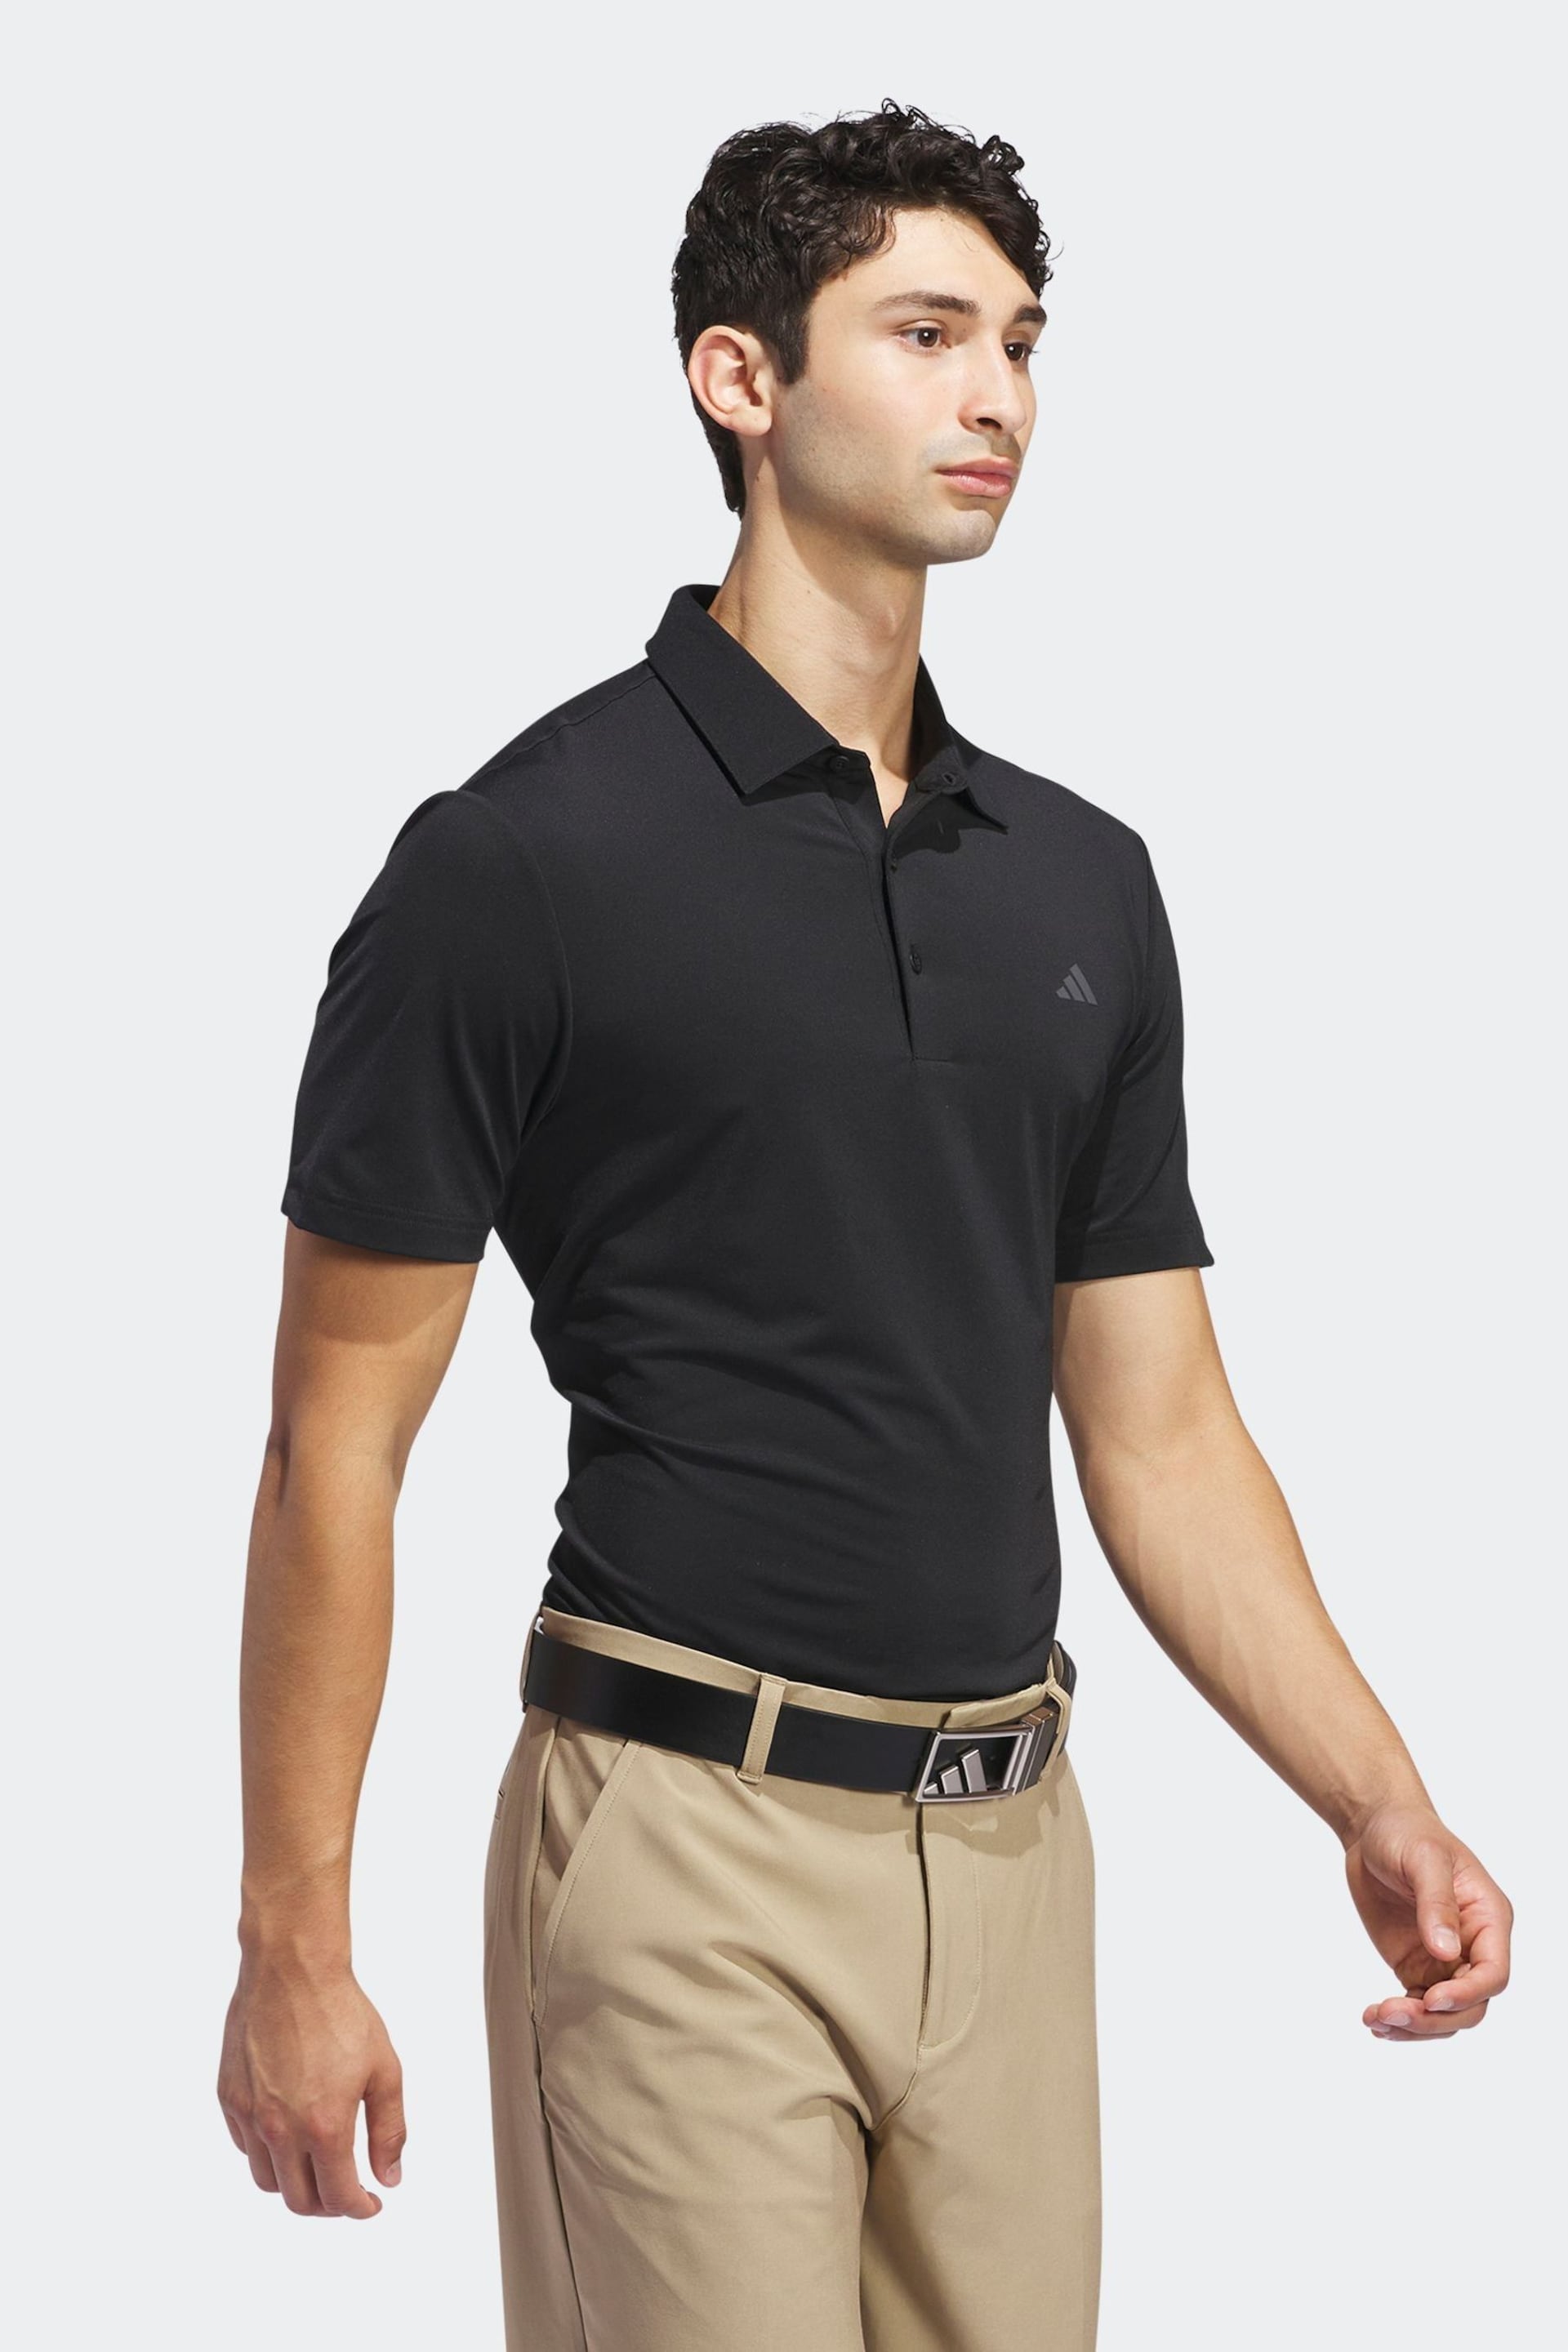 adidas Golf Ultimate365 Solid Polo Shirt - Image 3 of 7